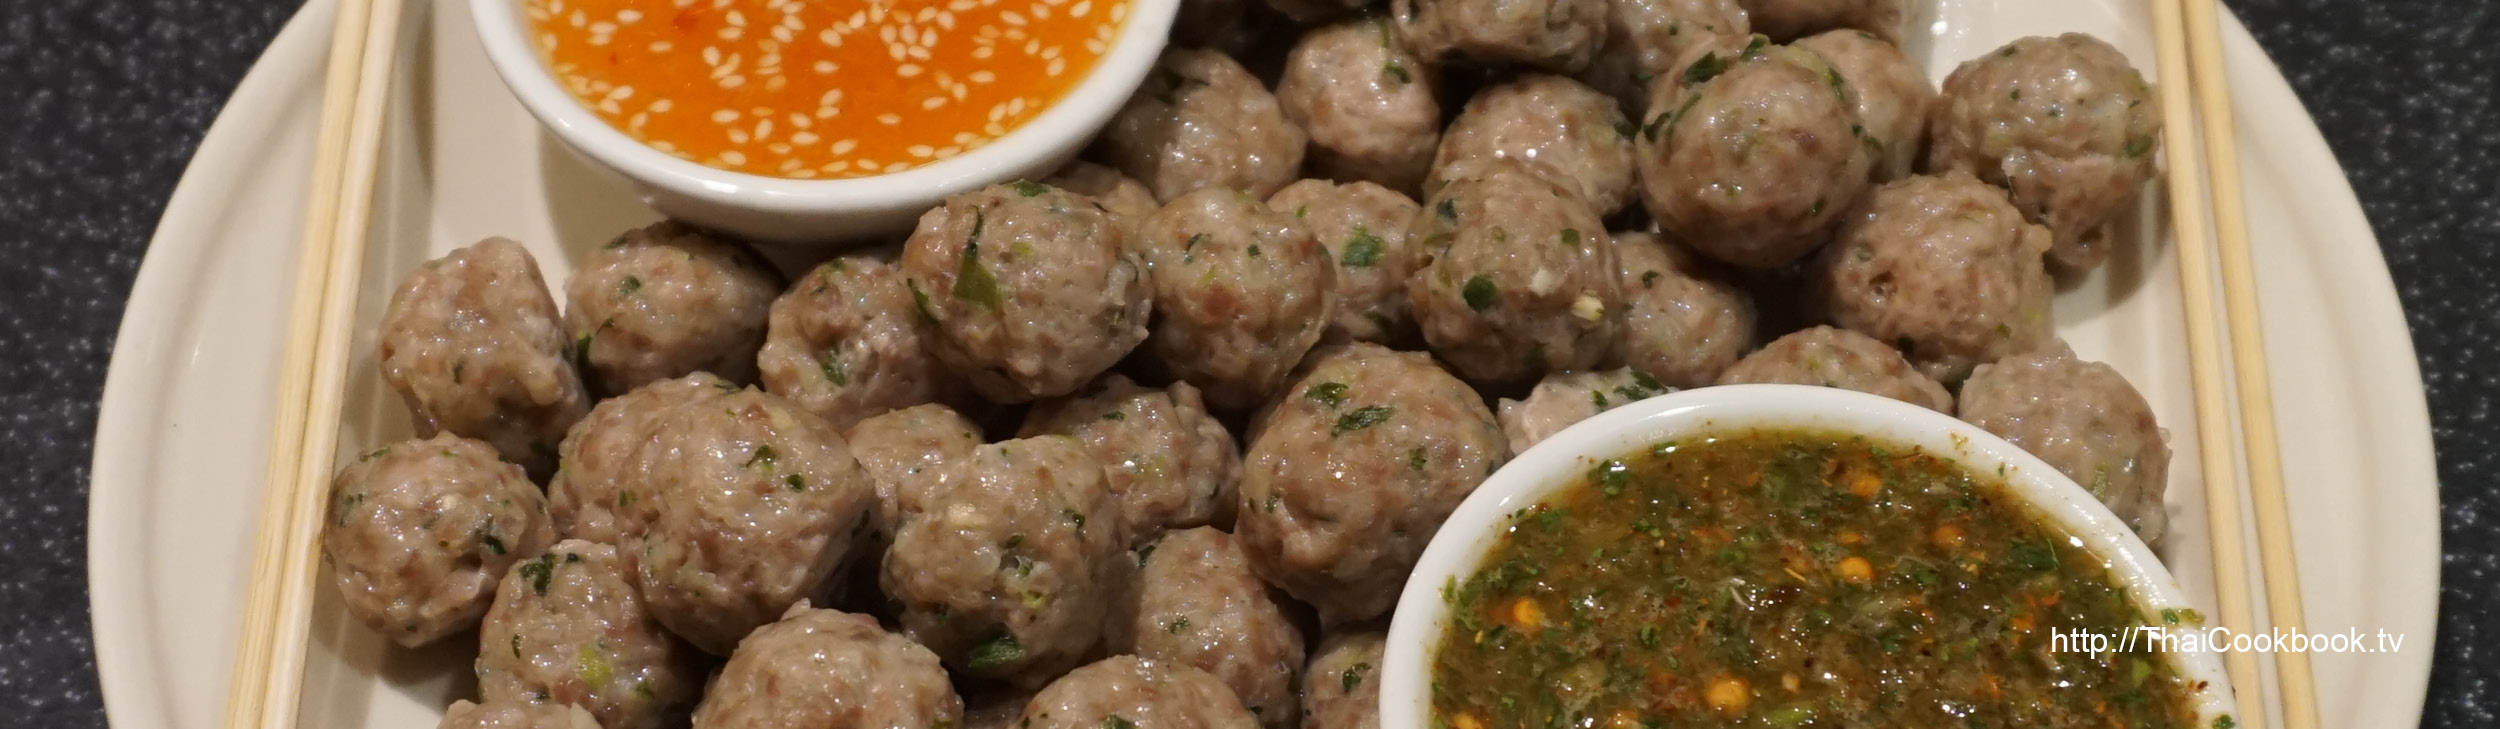 Authentic Thai recipe for Meatball Snacks